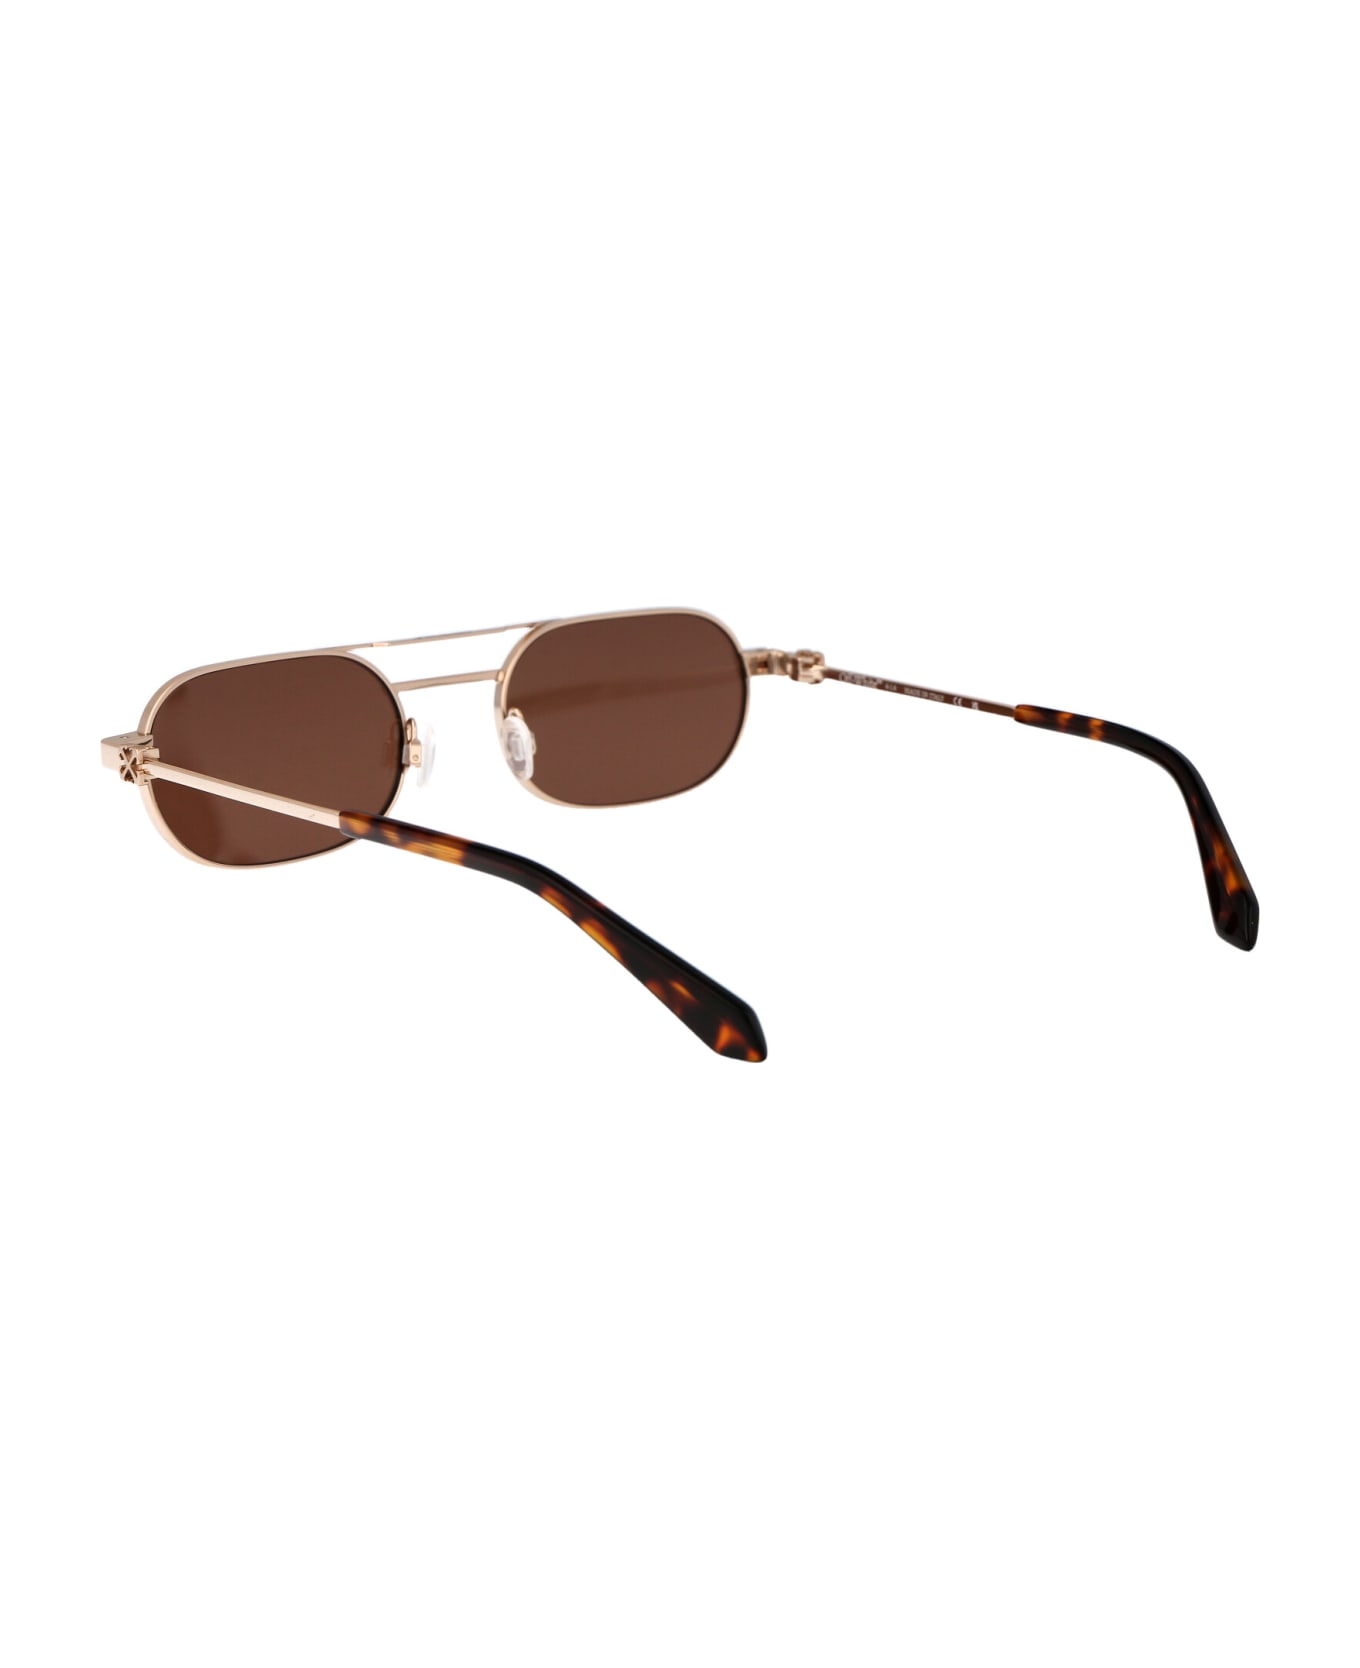 Off-White Vaiden Sunglasses - 7664 GOLD BROWN 